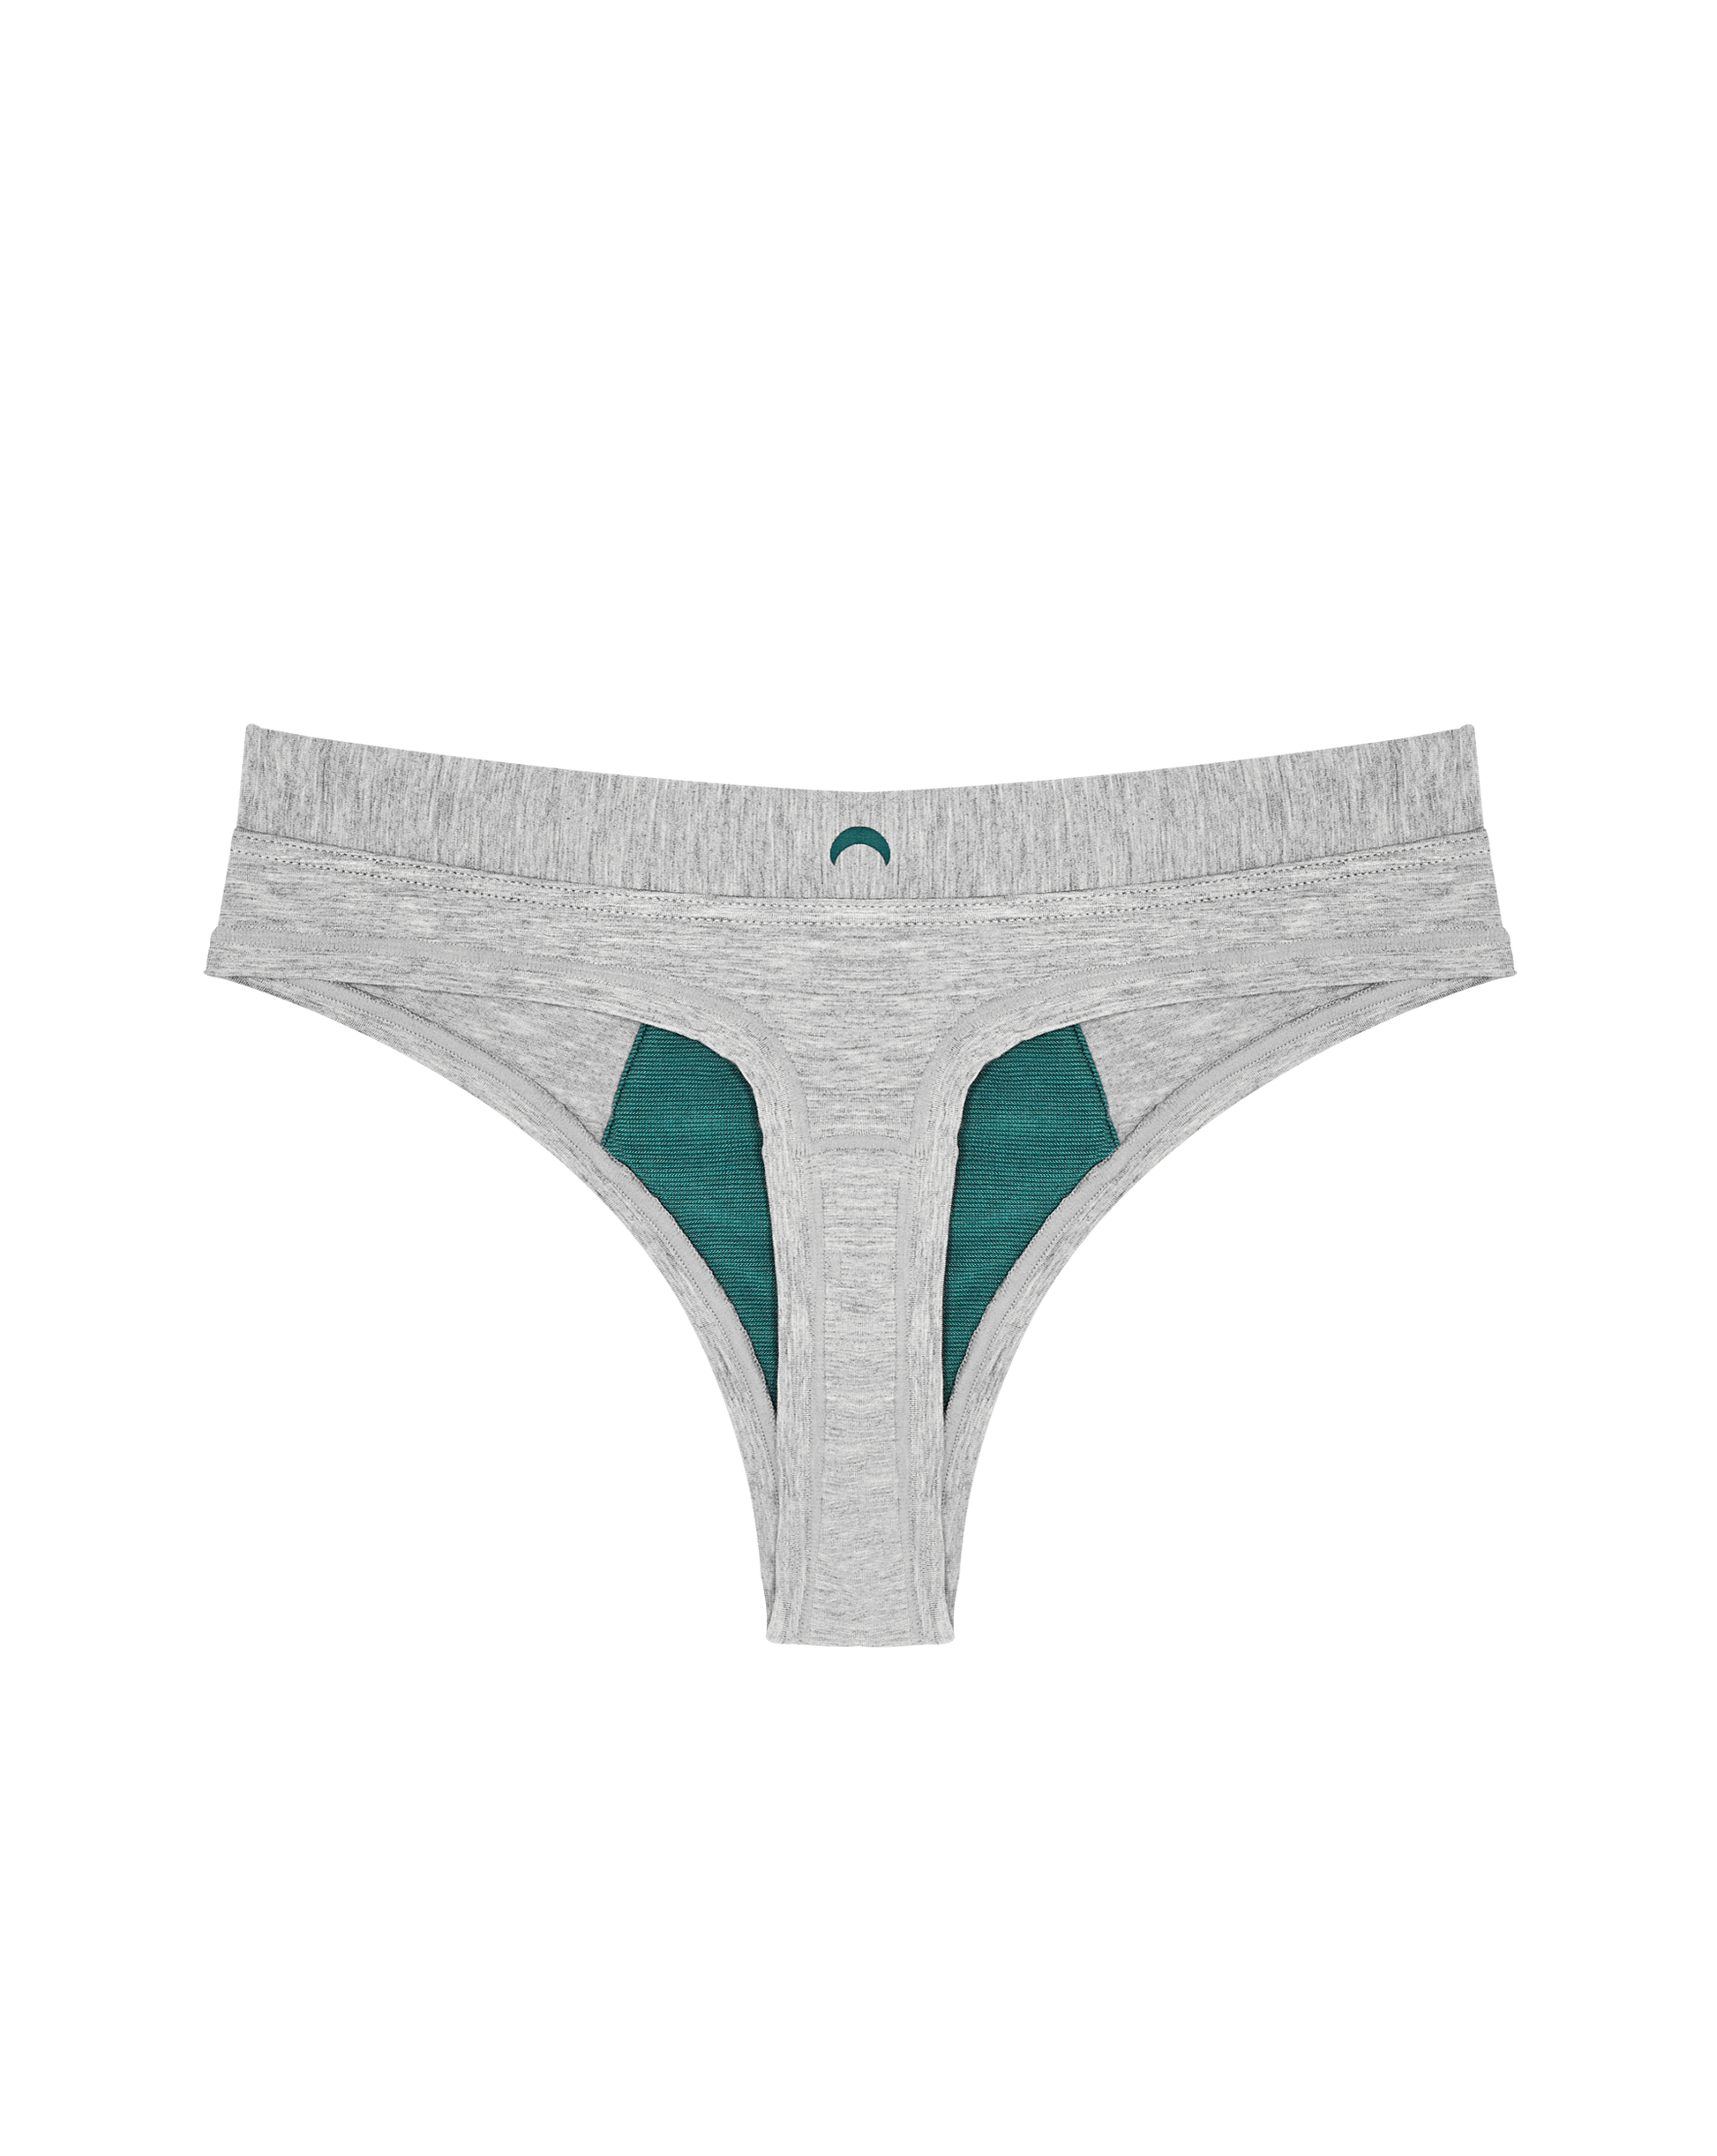 Thong – huha underwear